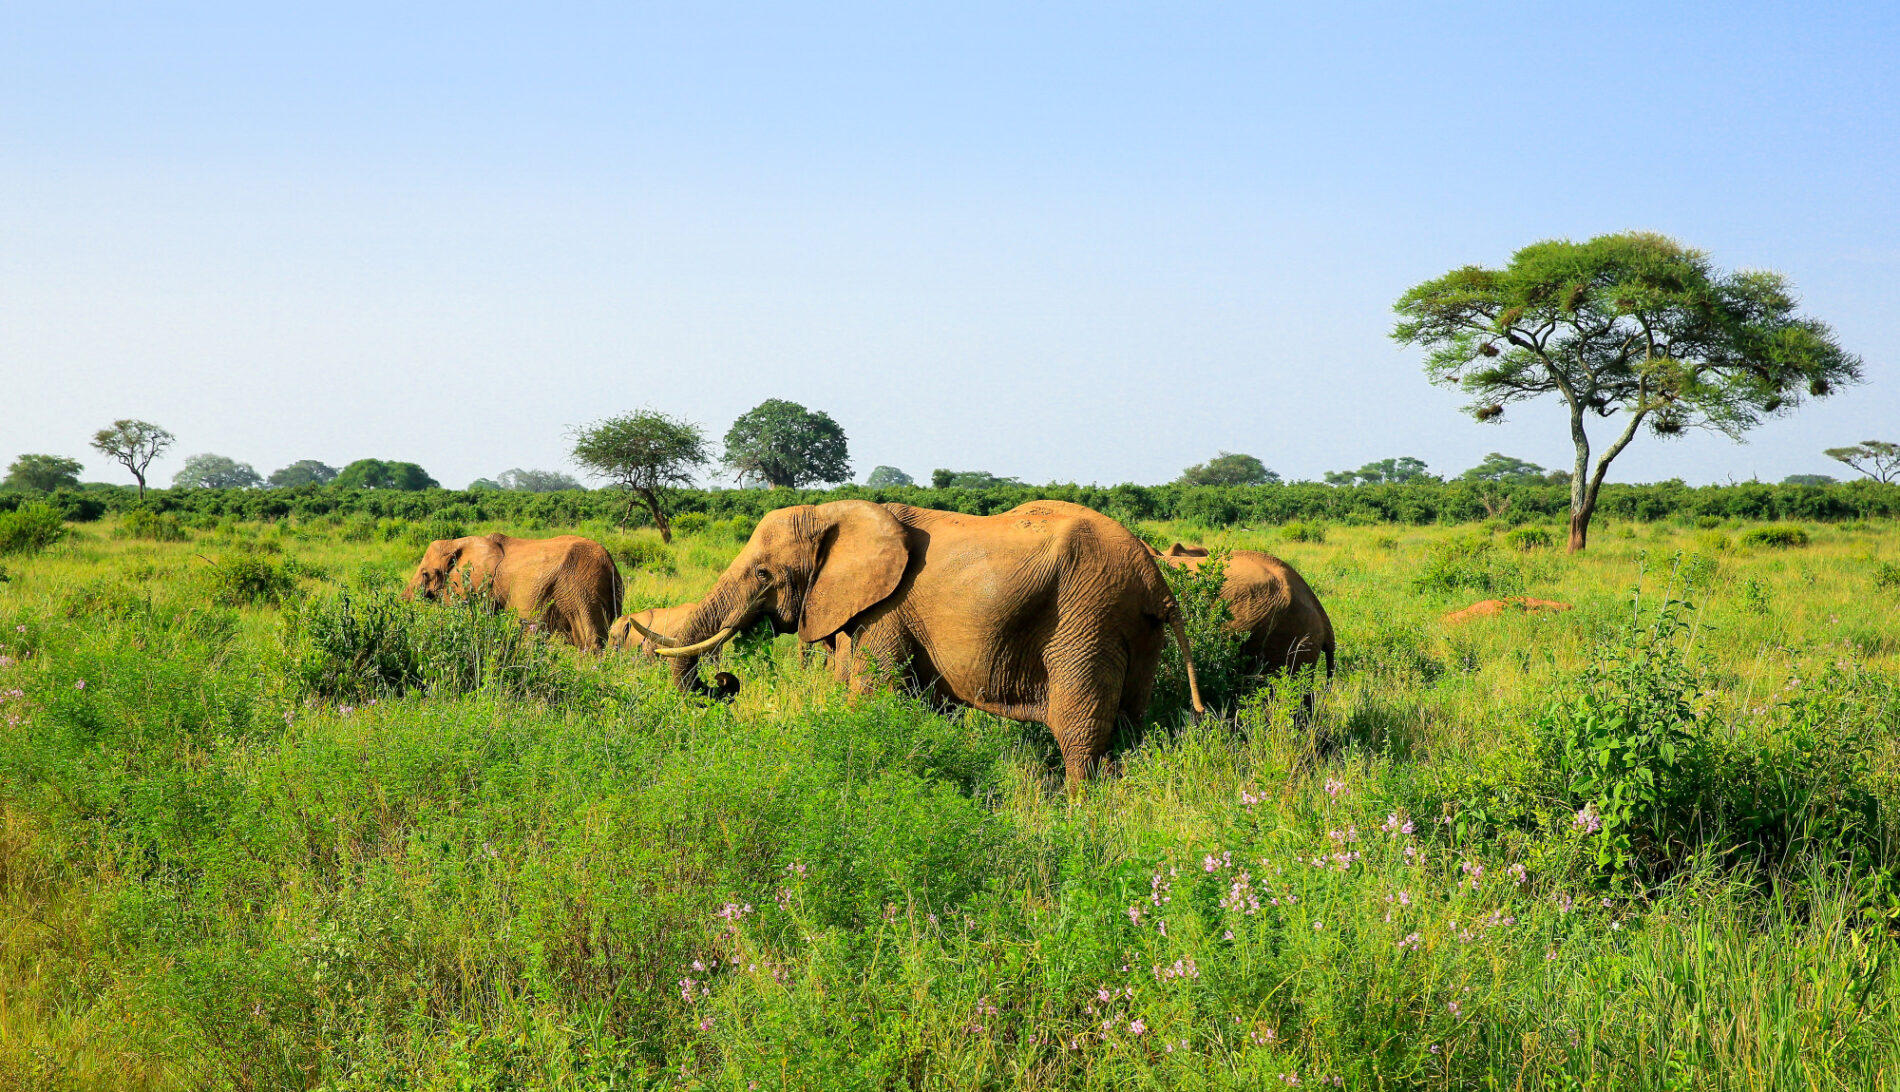 Elefanten im Gras © Lars Eichapfel